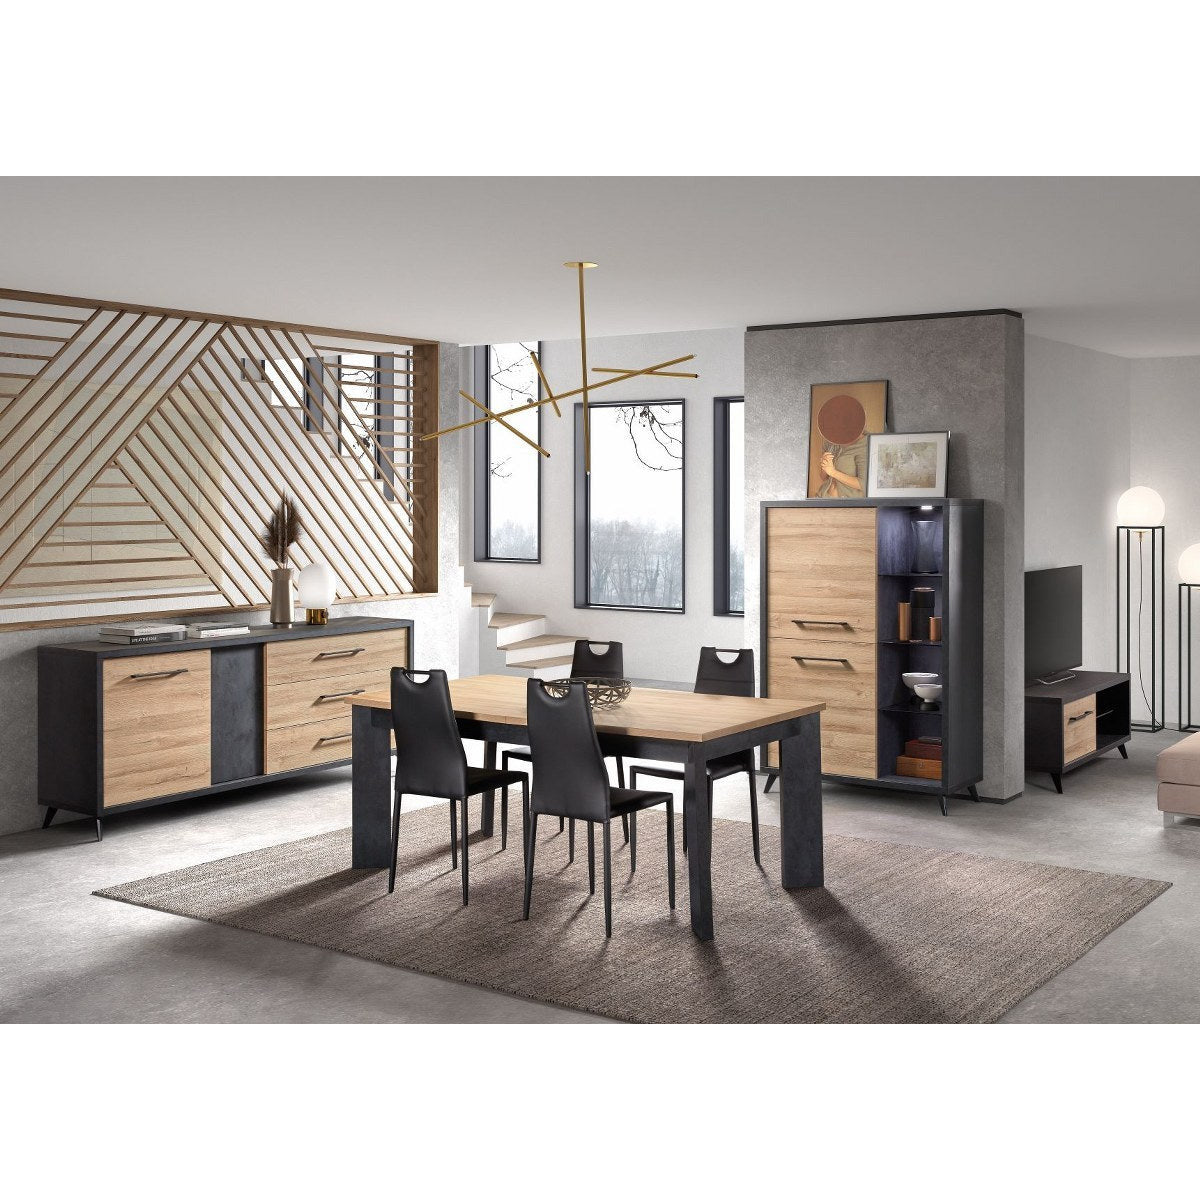 Wall cabinet | Furniture series Moulin | Natural, black | 185x100x